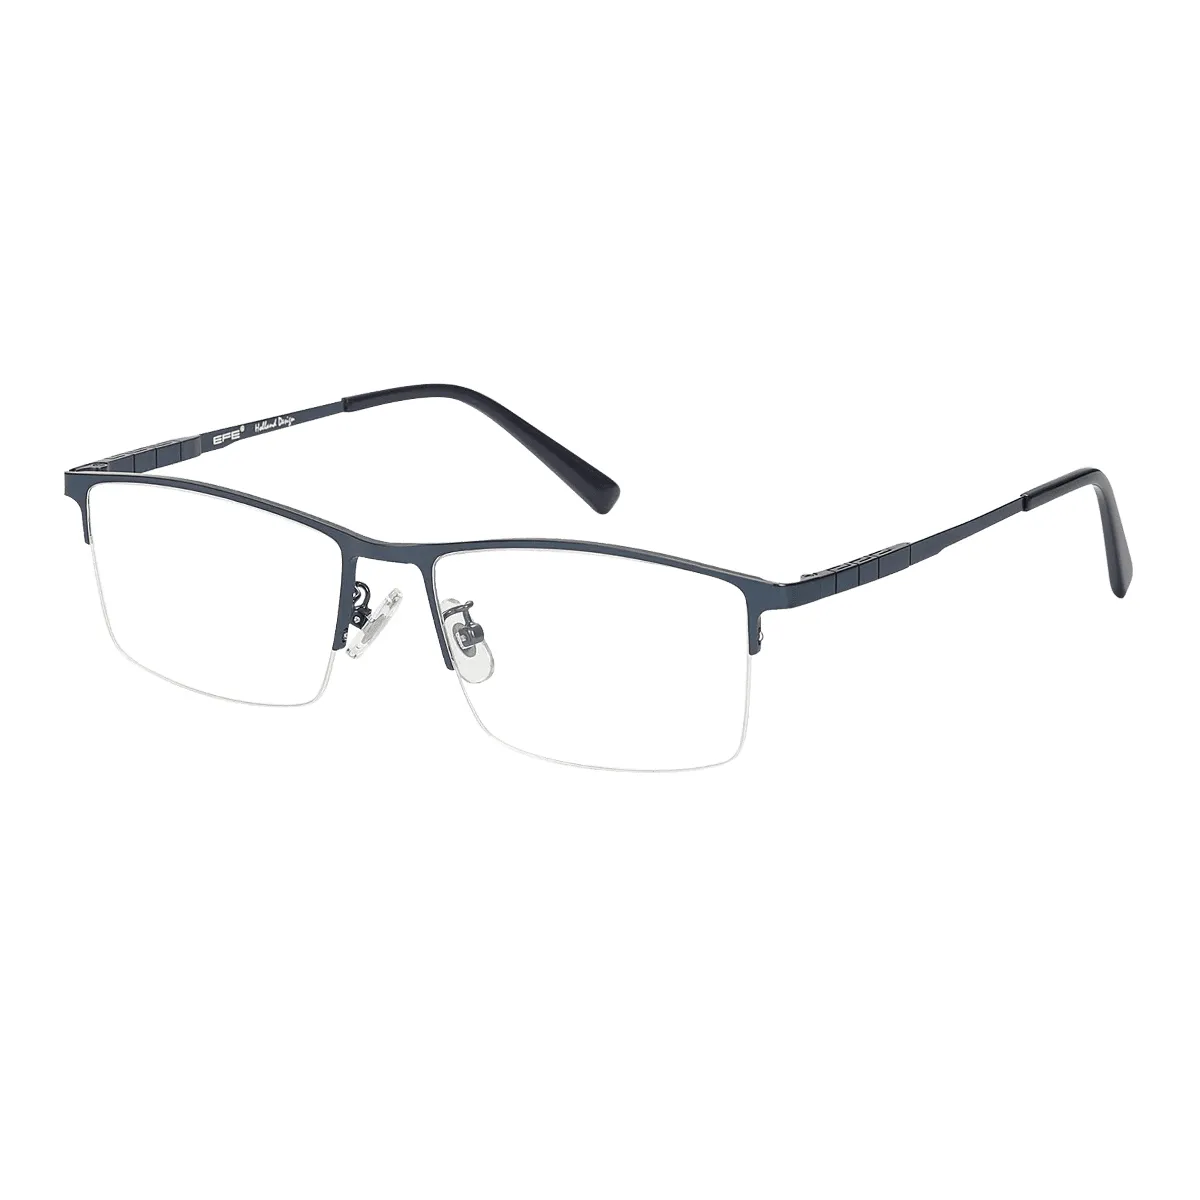 Clifford - Browline Blue Glasses for Men